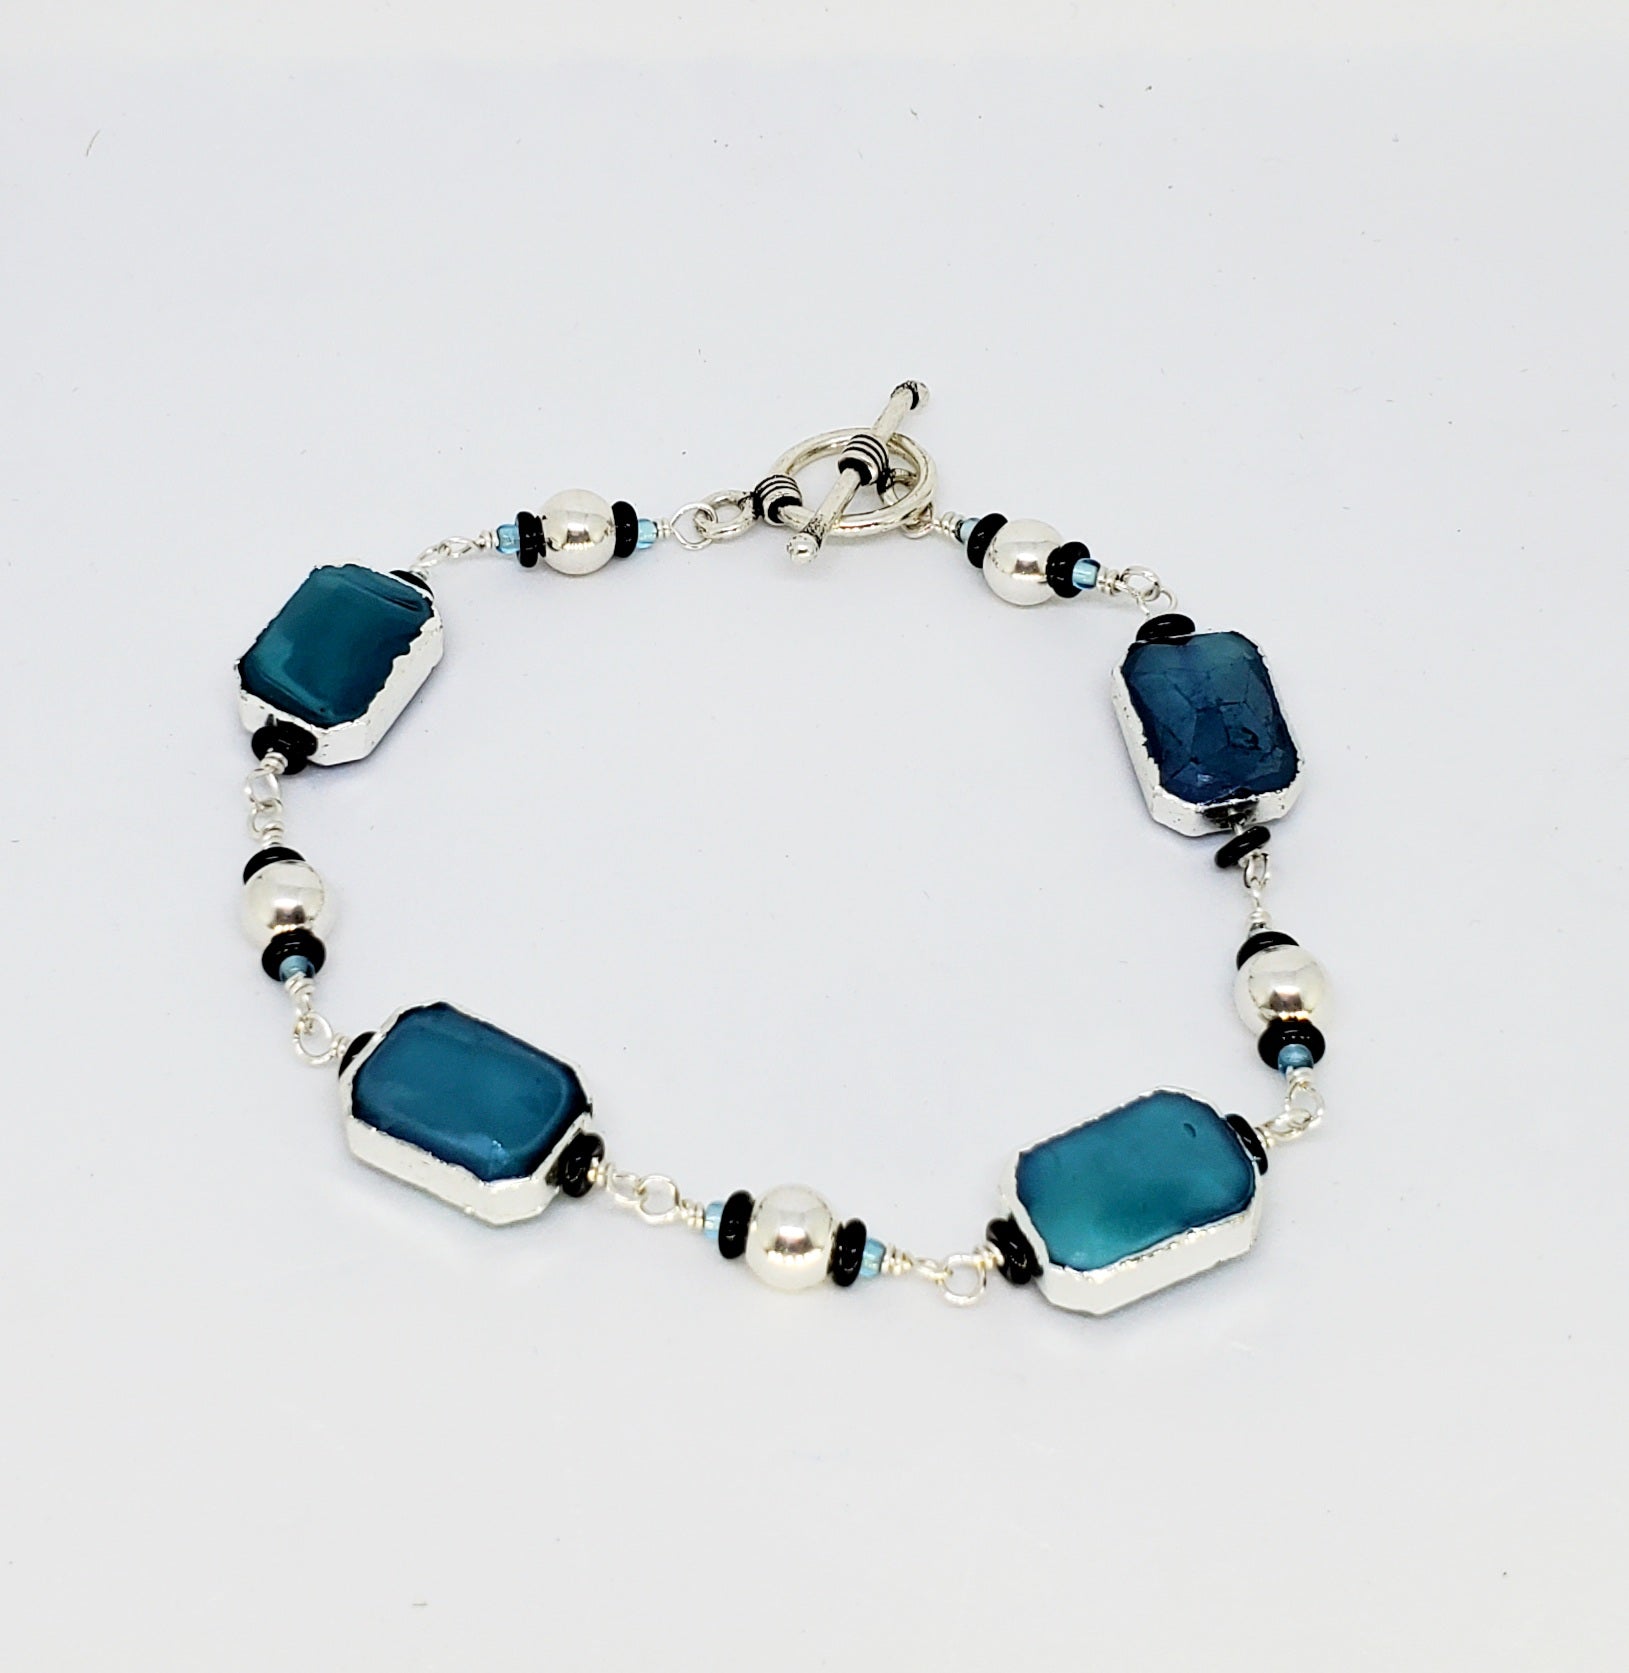 Blue Jade Sterling Silver wire linked Bracelet